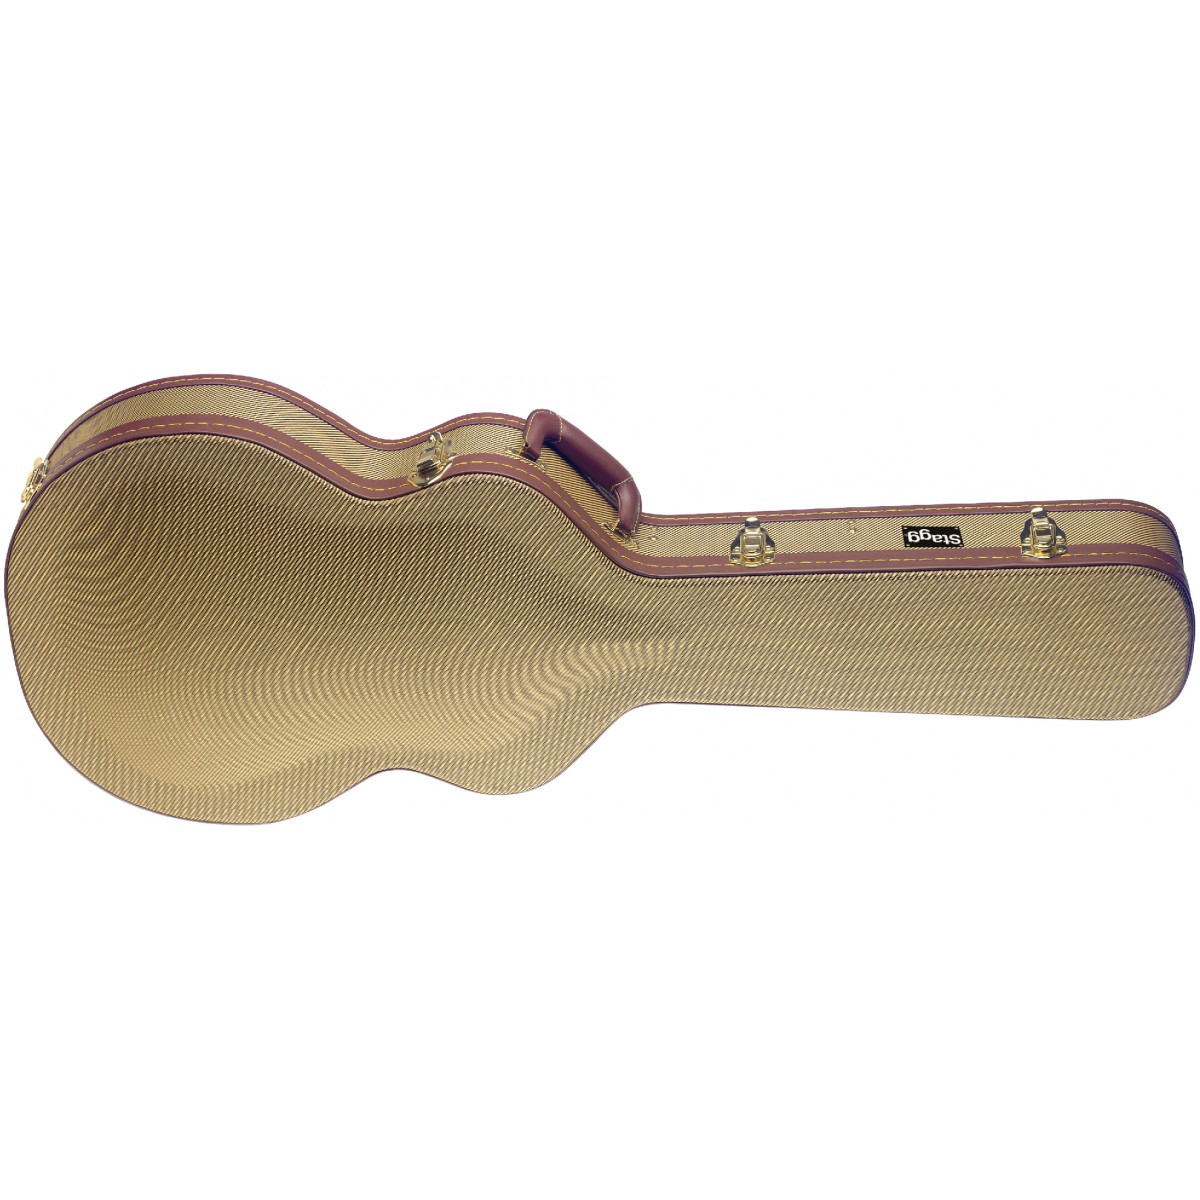 Stagg GCX-SA GD, kufr deluxe pro semiakustickou kytaru, zlatý tweed